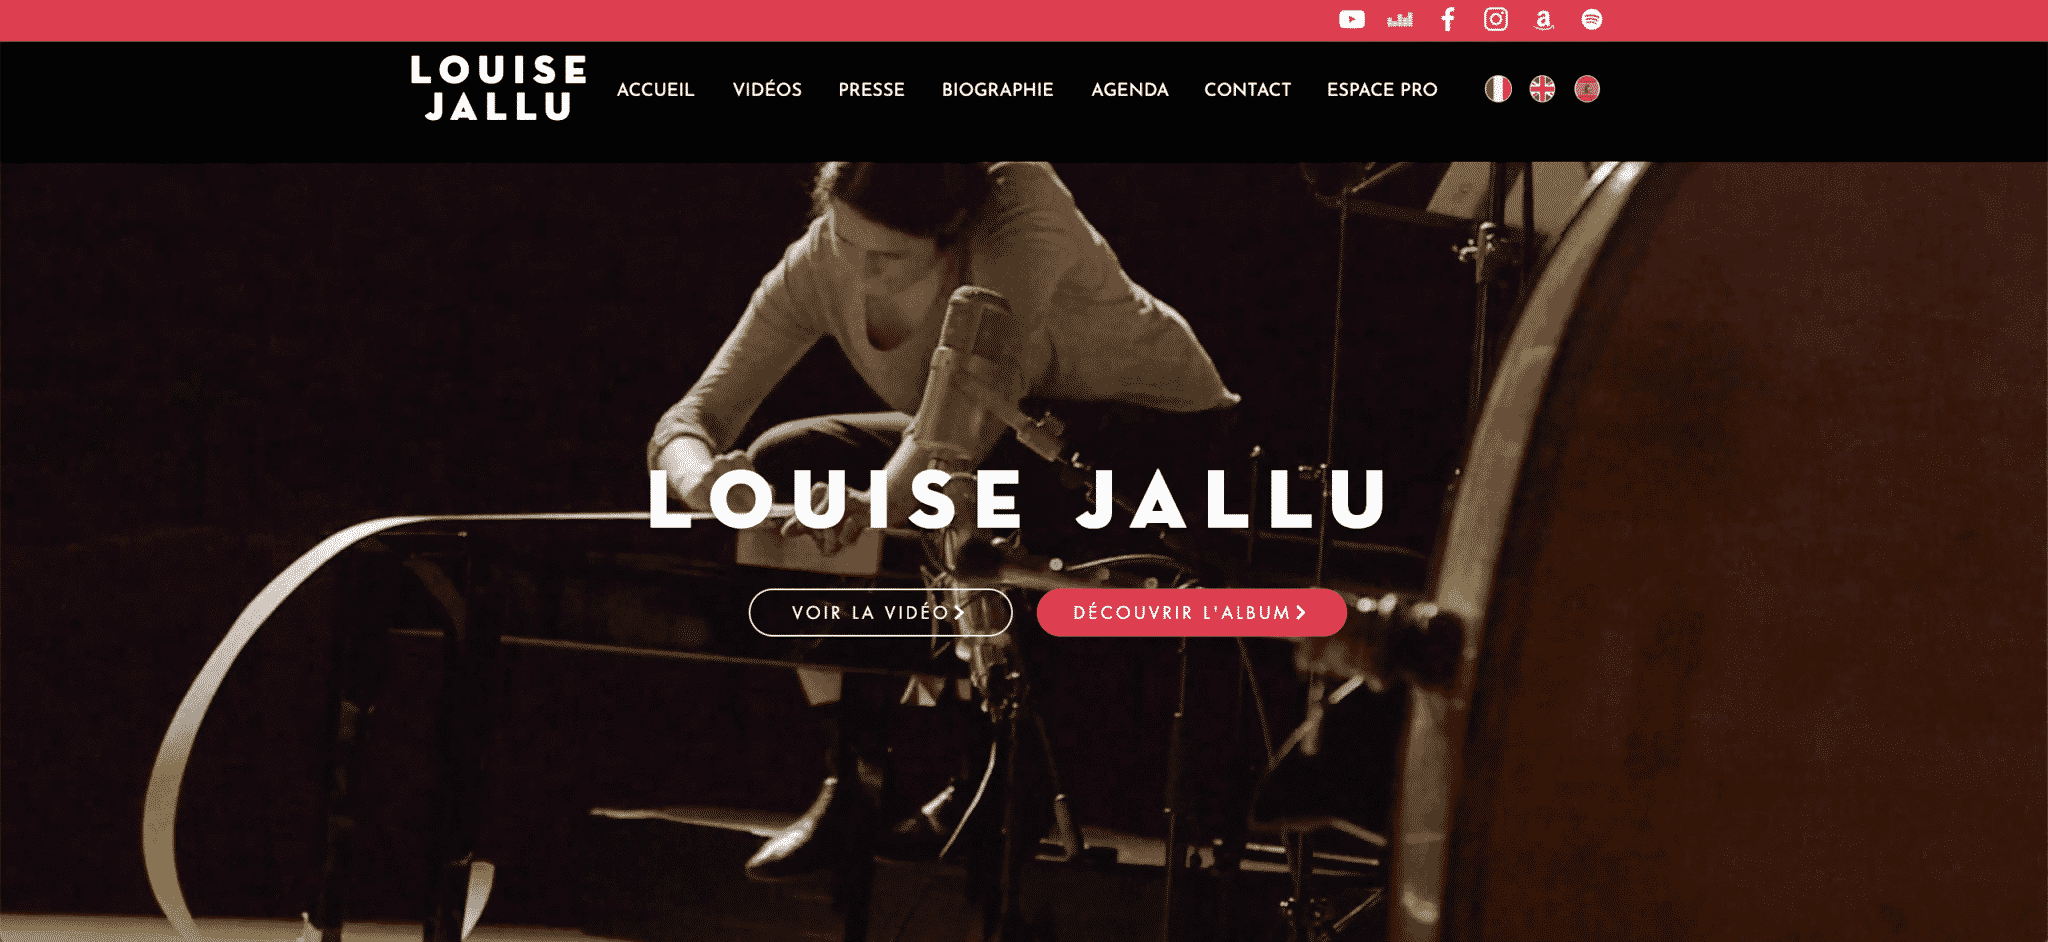 Louise Jallu exemples de sites portfolio Wix